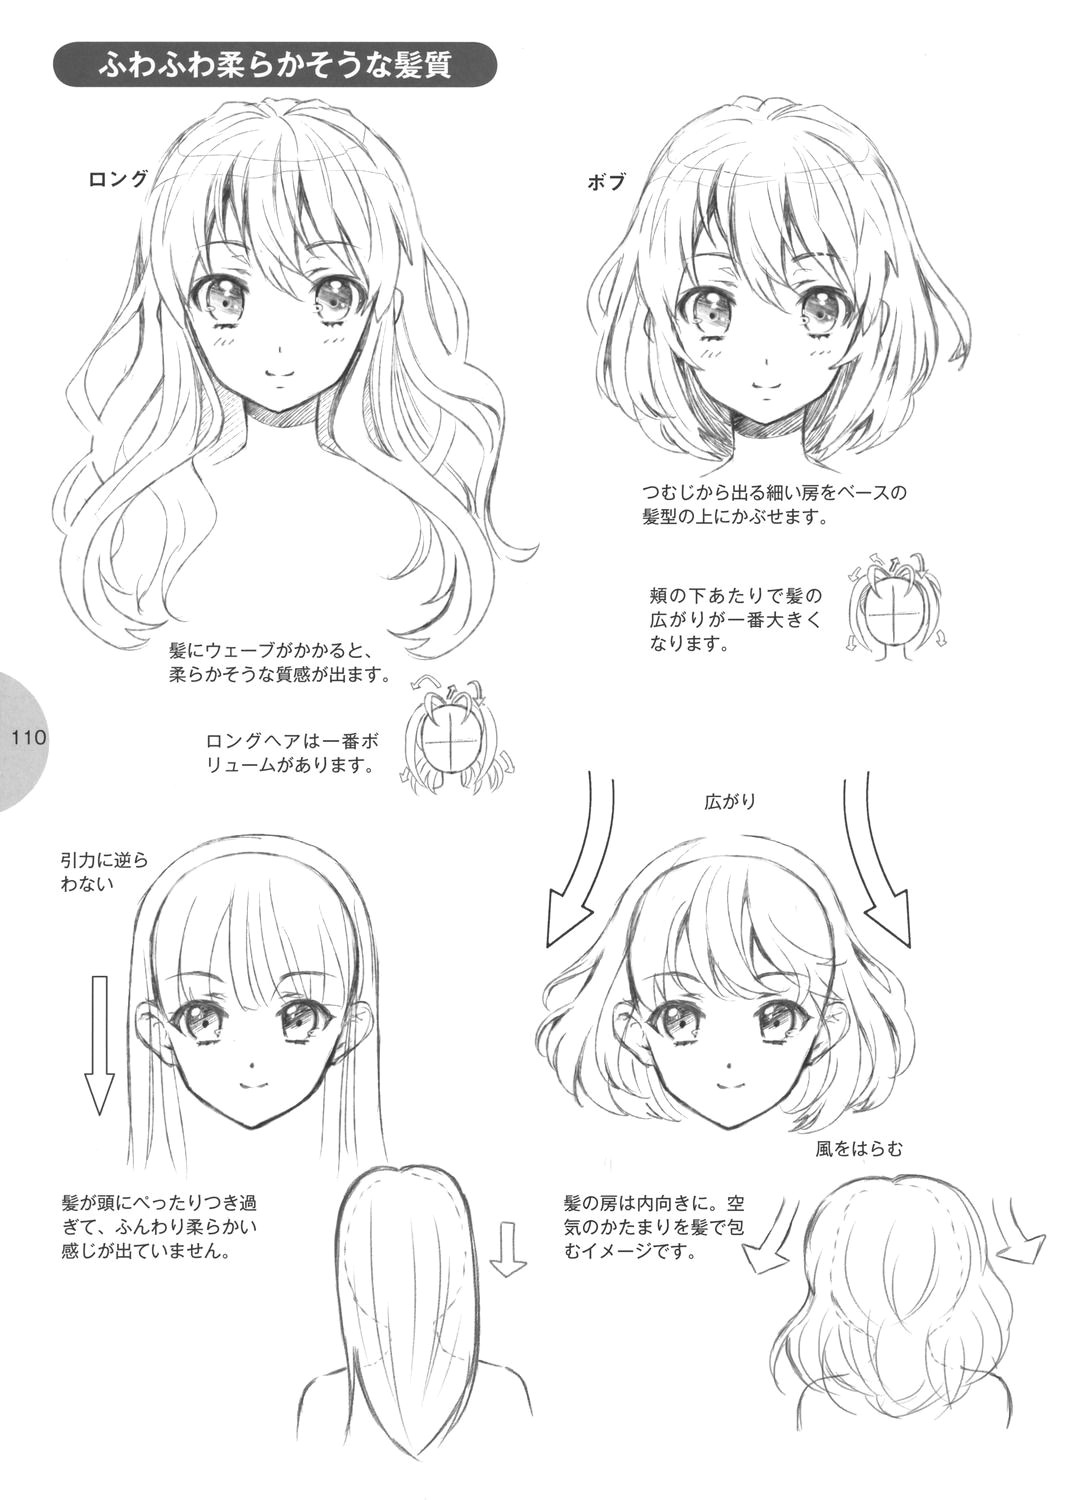 Anime Drawings Easy Nose Tutorial Hair Artsy Inpirations Pinterest Drawings Manga